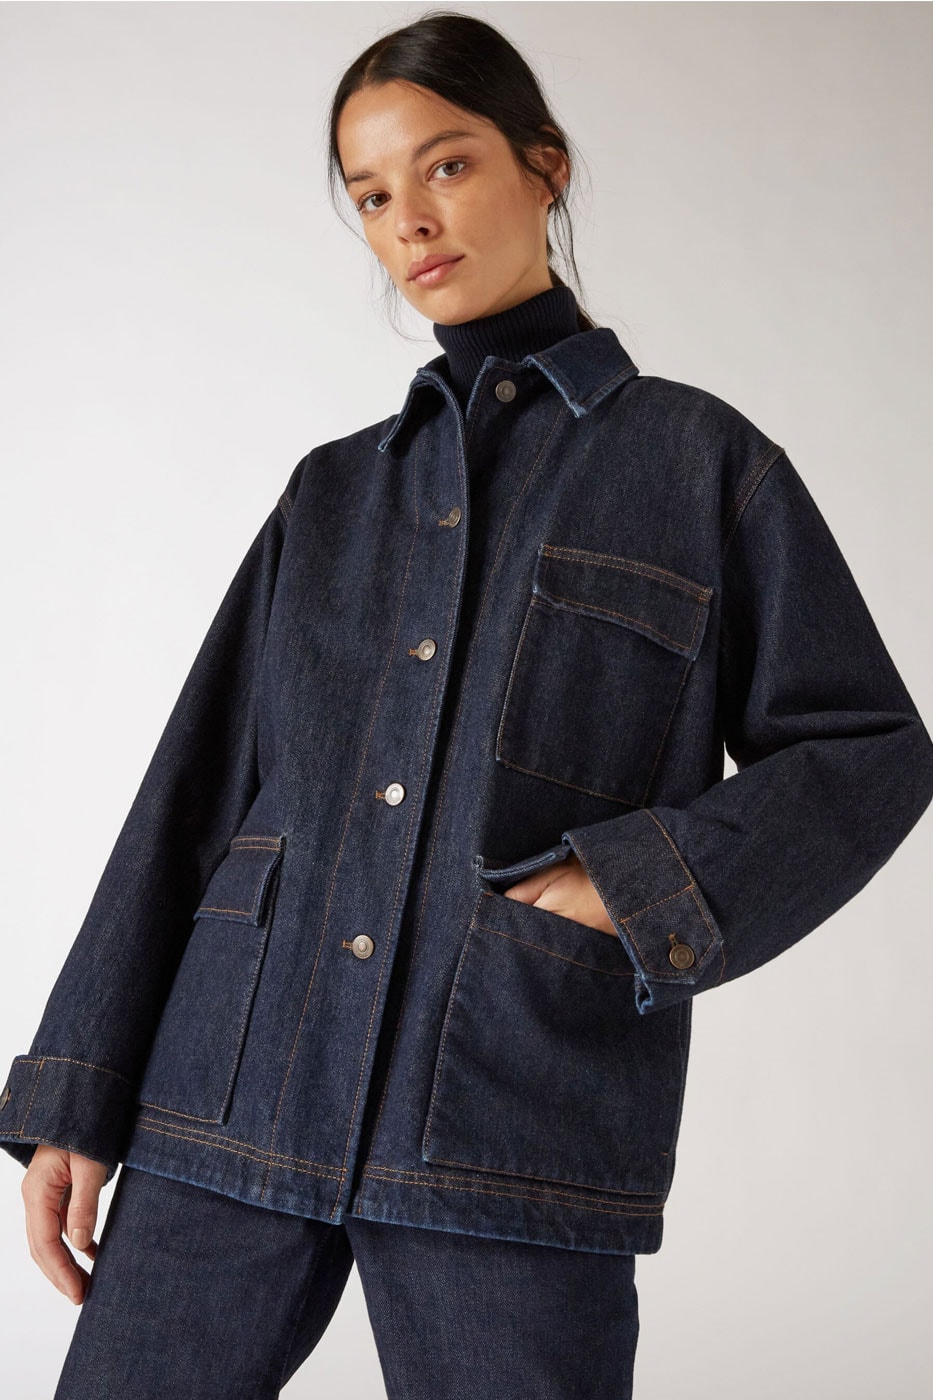 Loro Piana Cyrius Jacket Jeans Cashmere jersey launches cashdenim program italy japan bingo artisan selvedge release info date price